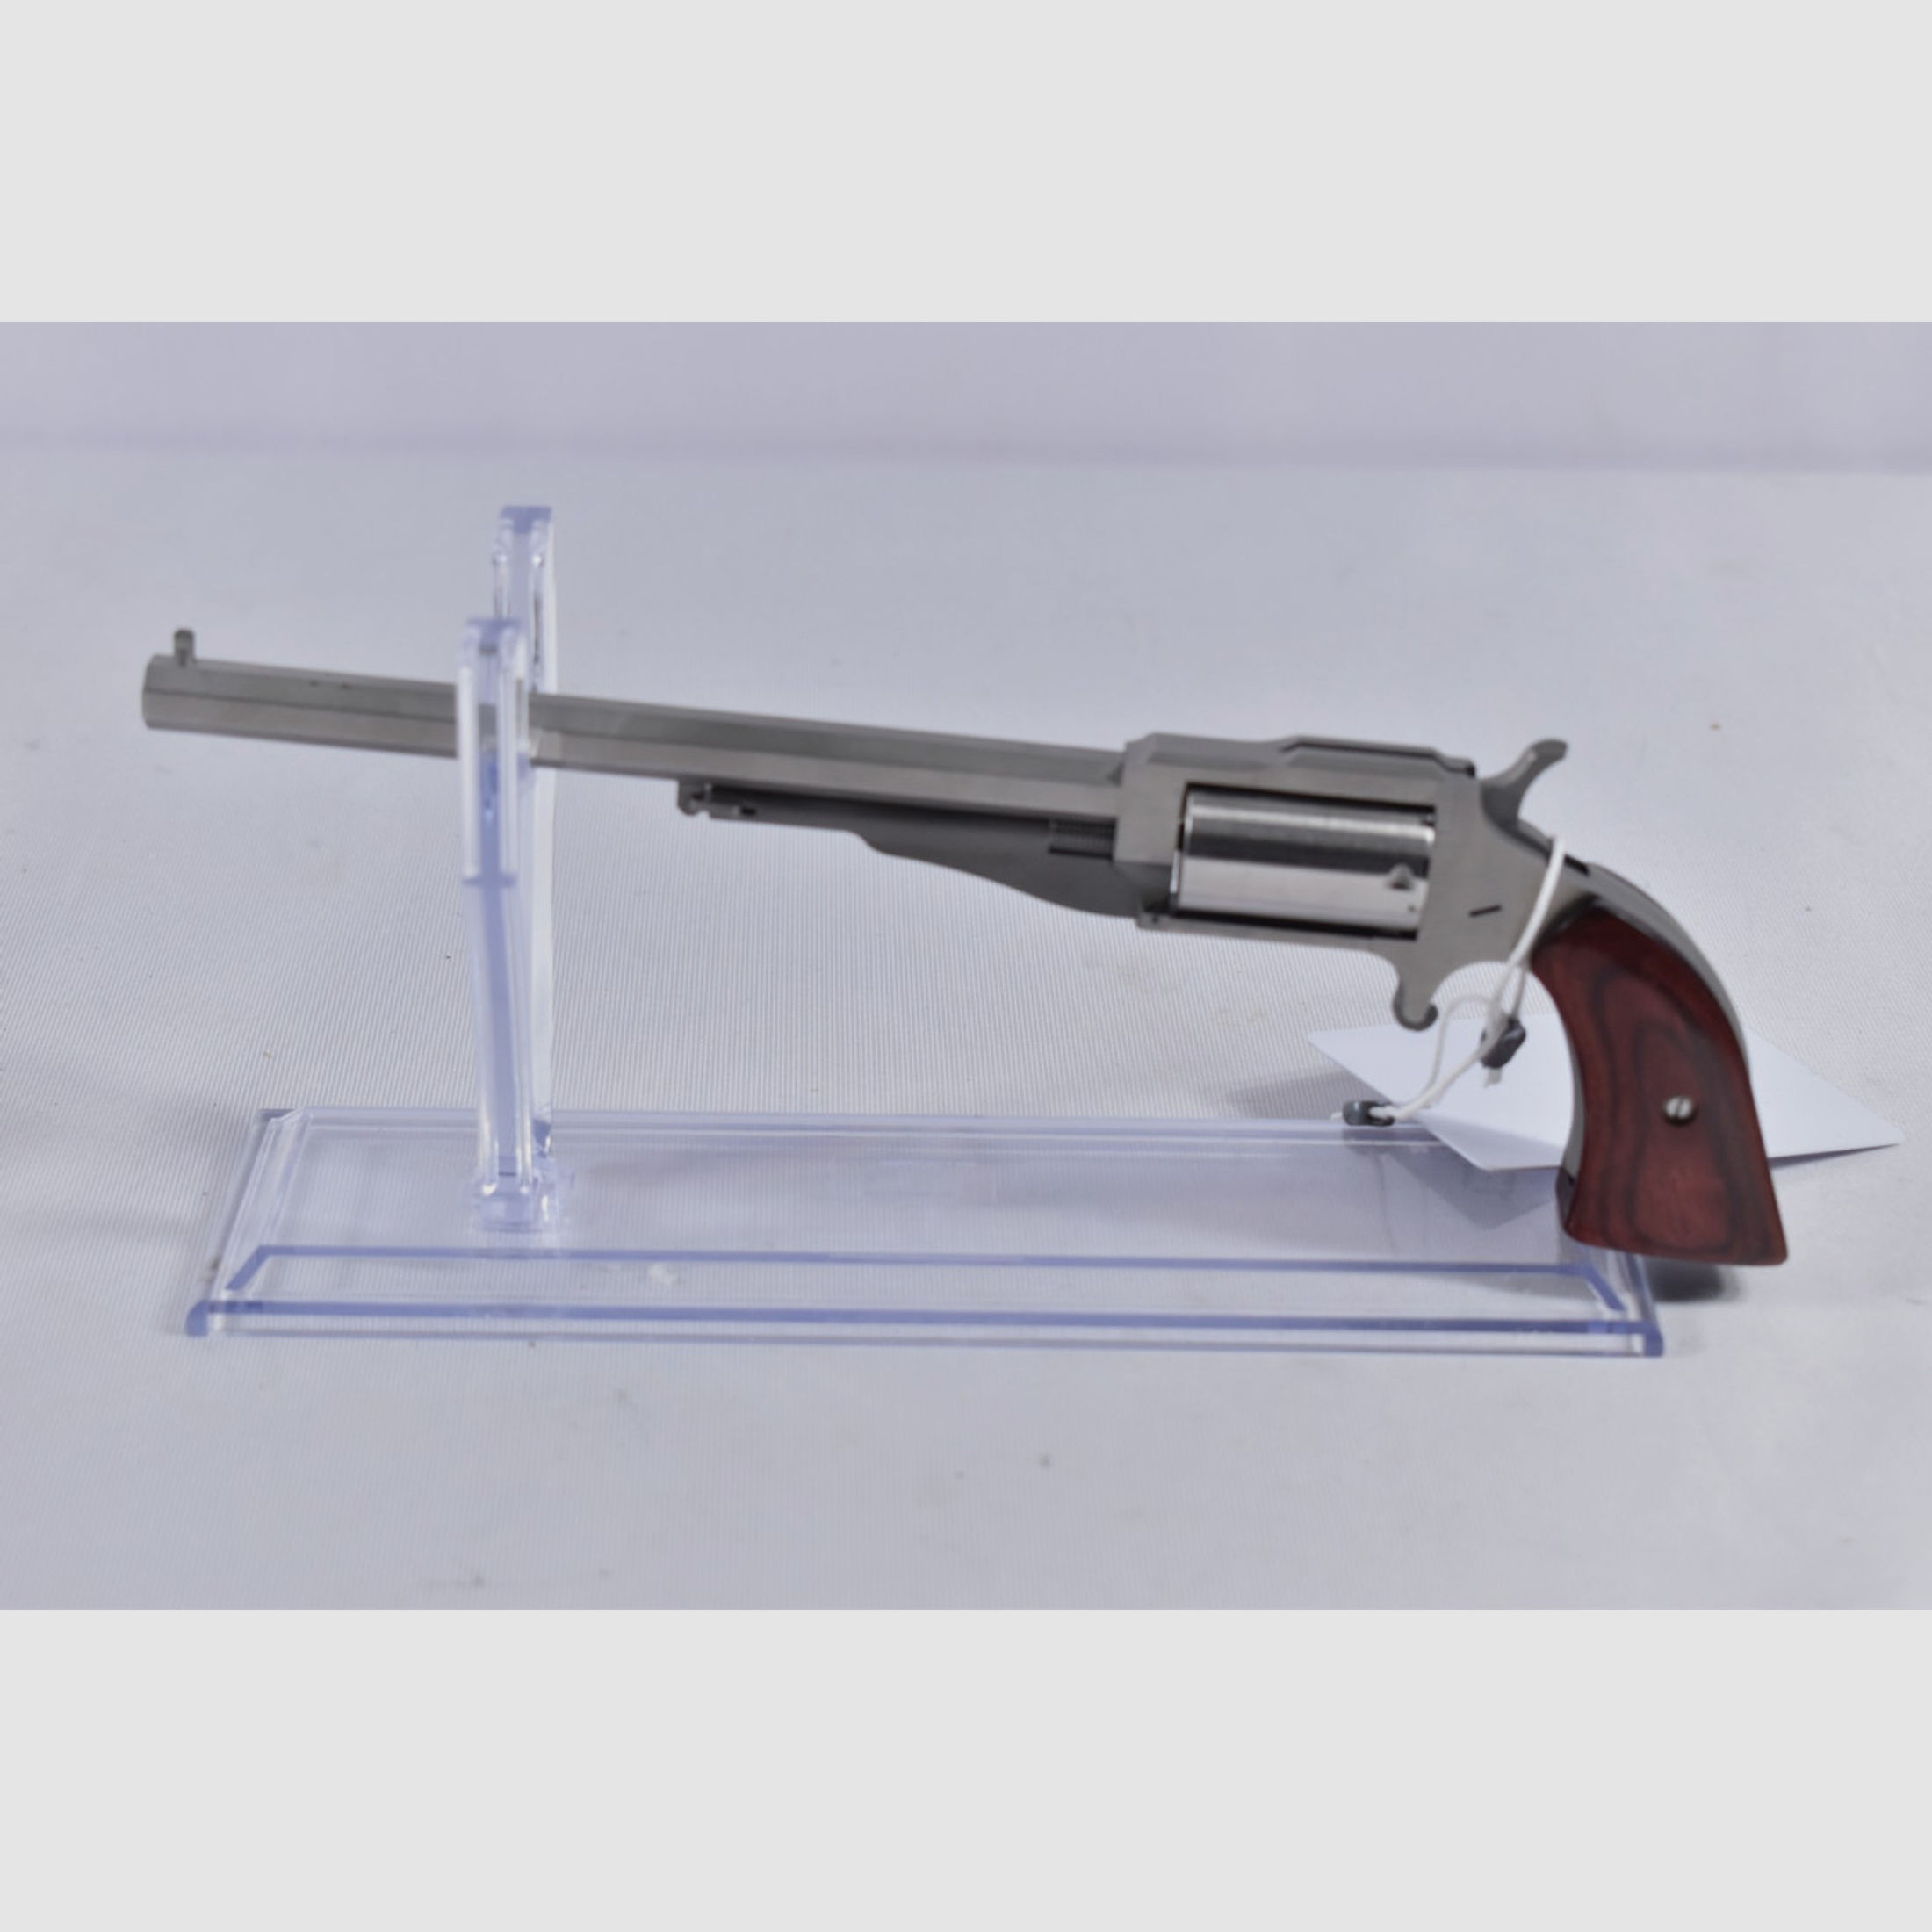 North American Arms 1860 .22WinMag Revolver